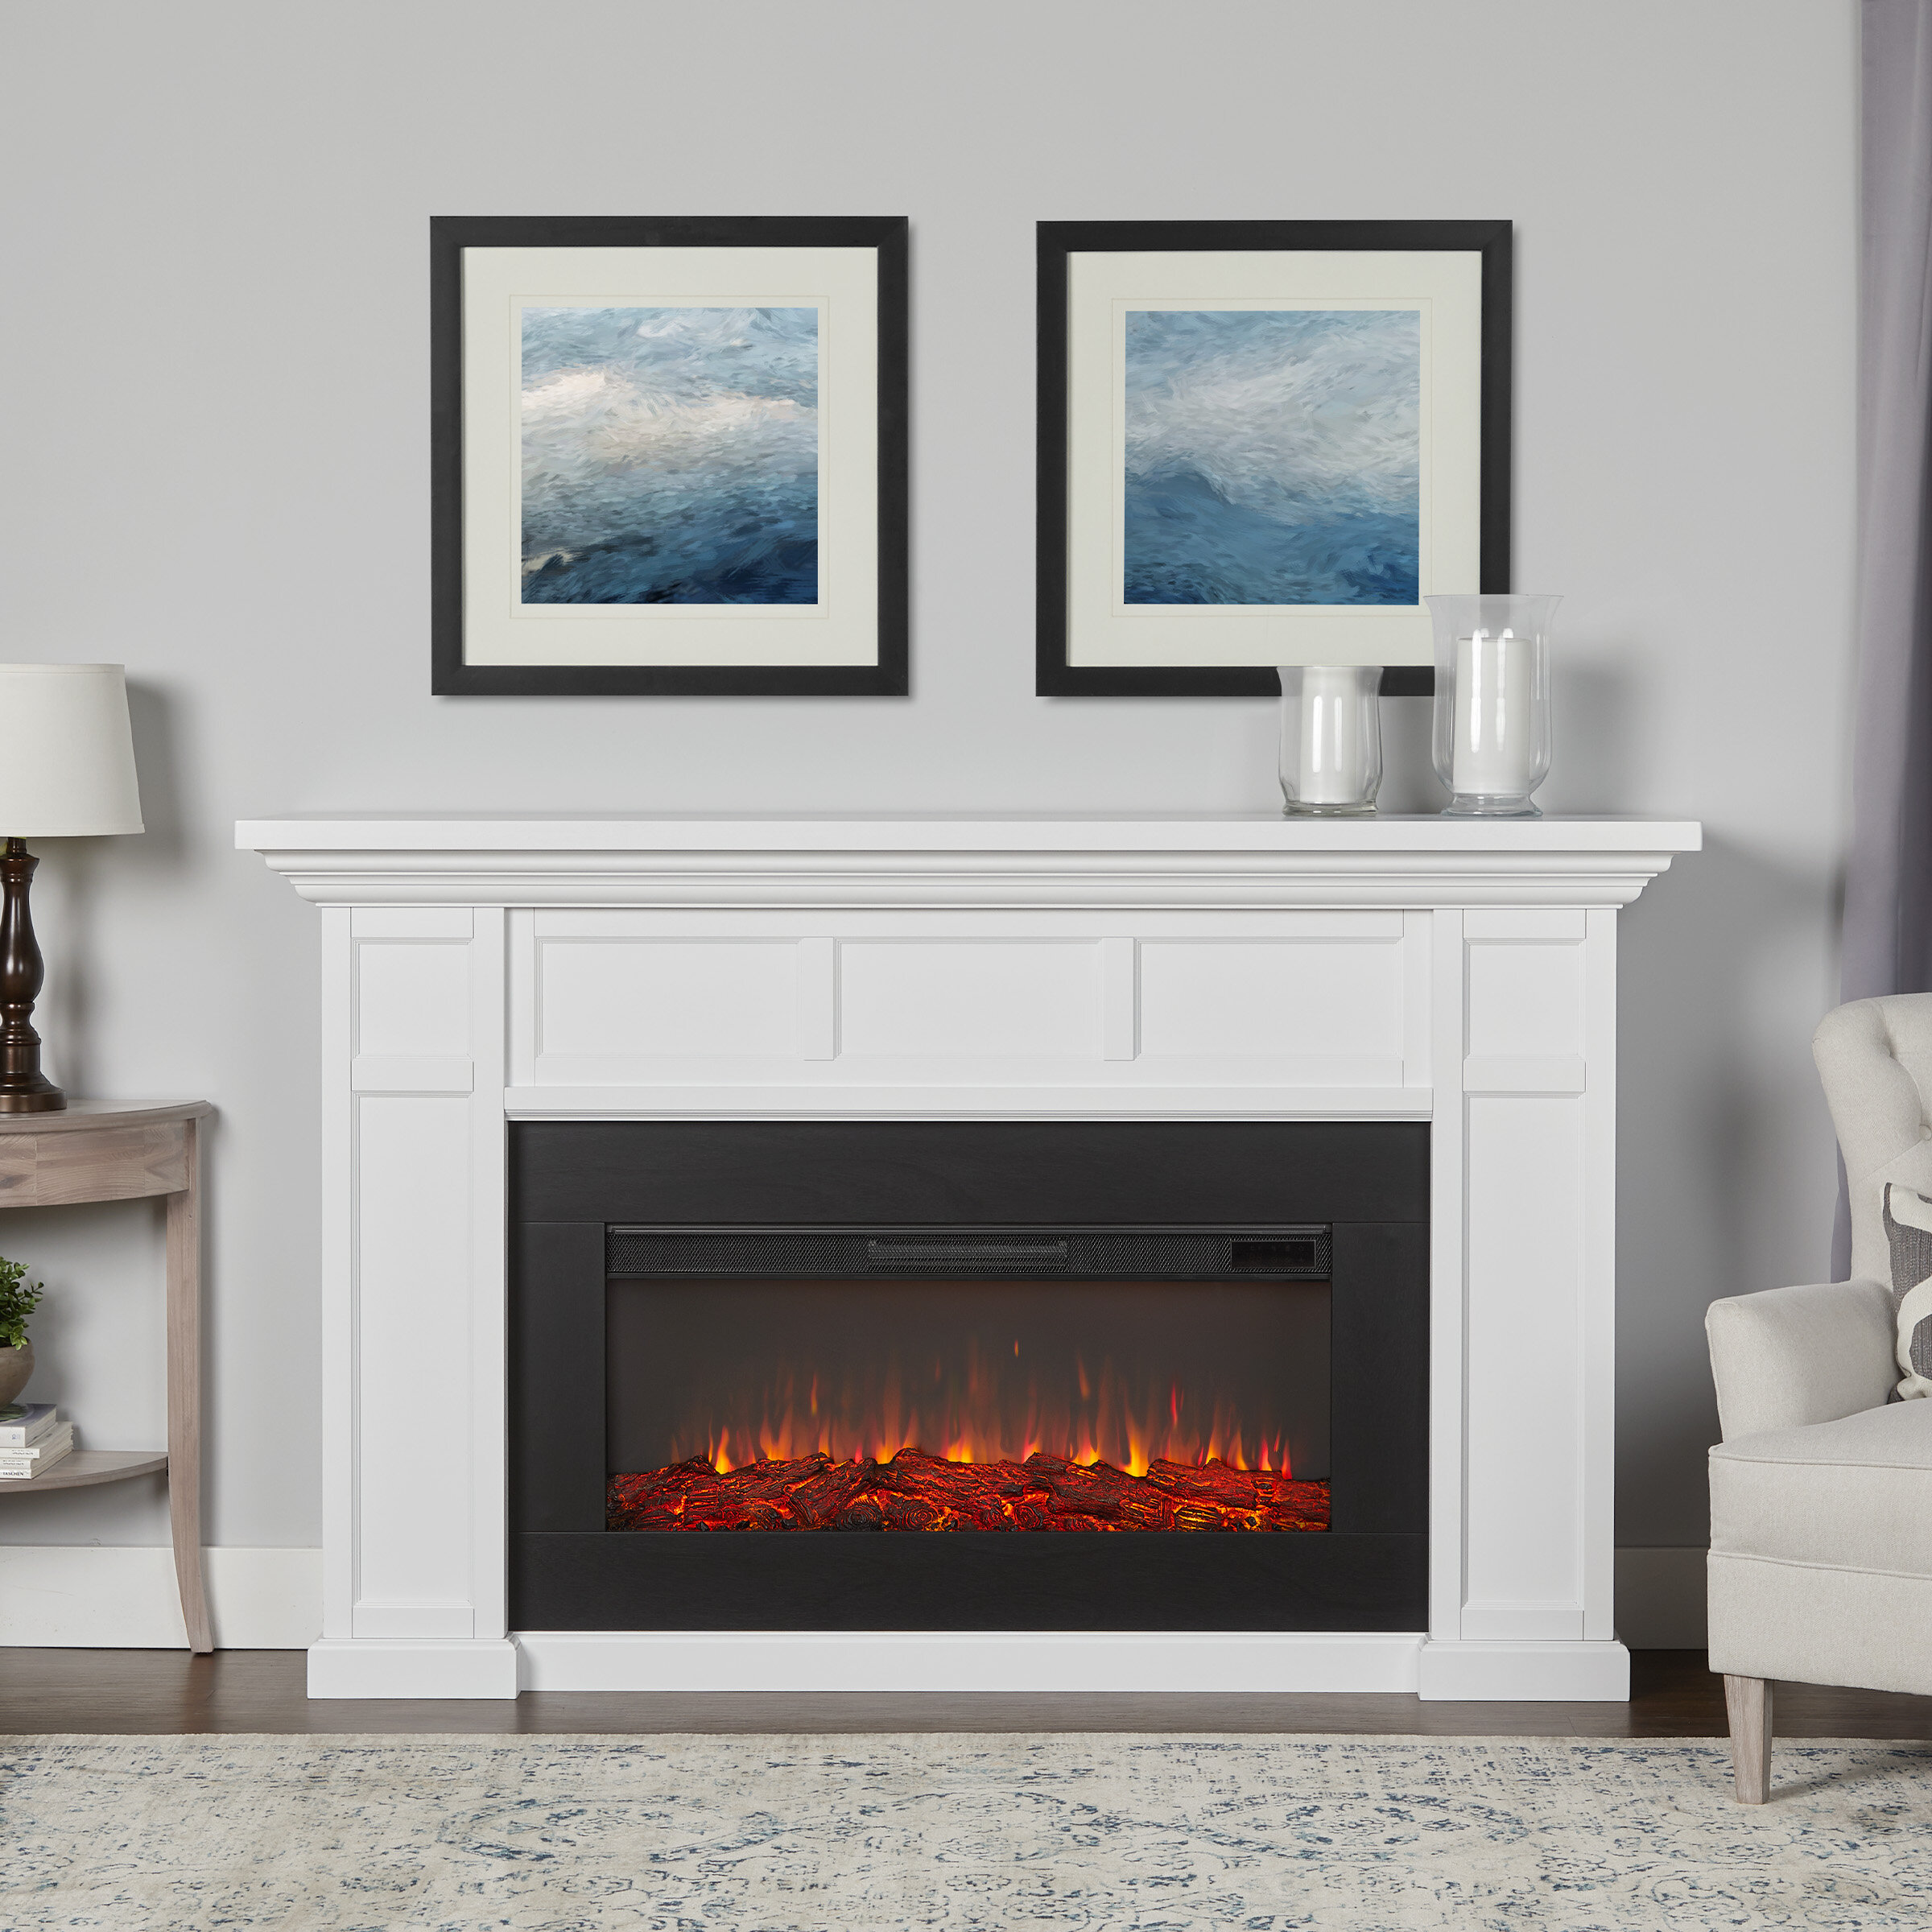 Fire Fireplace Living Room Mantelpiece Black Free Standing Flicker Flame Heater 